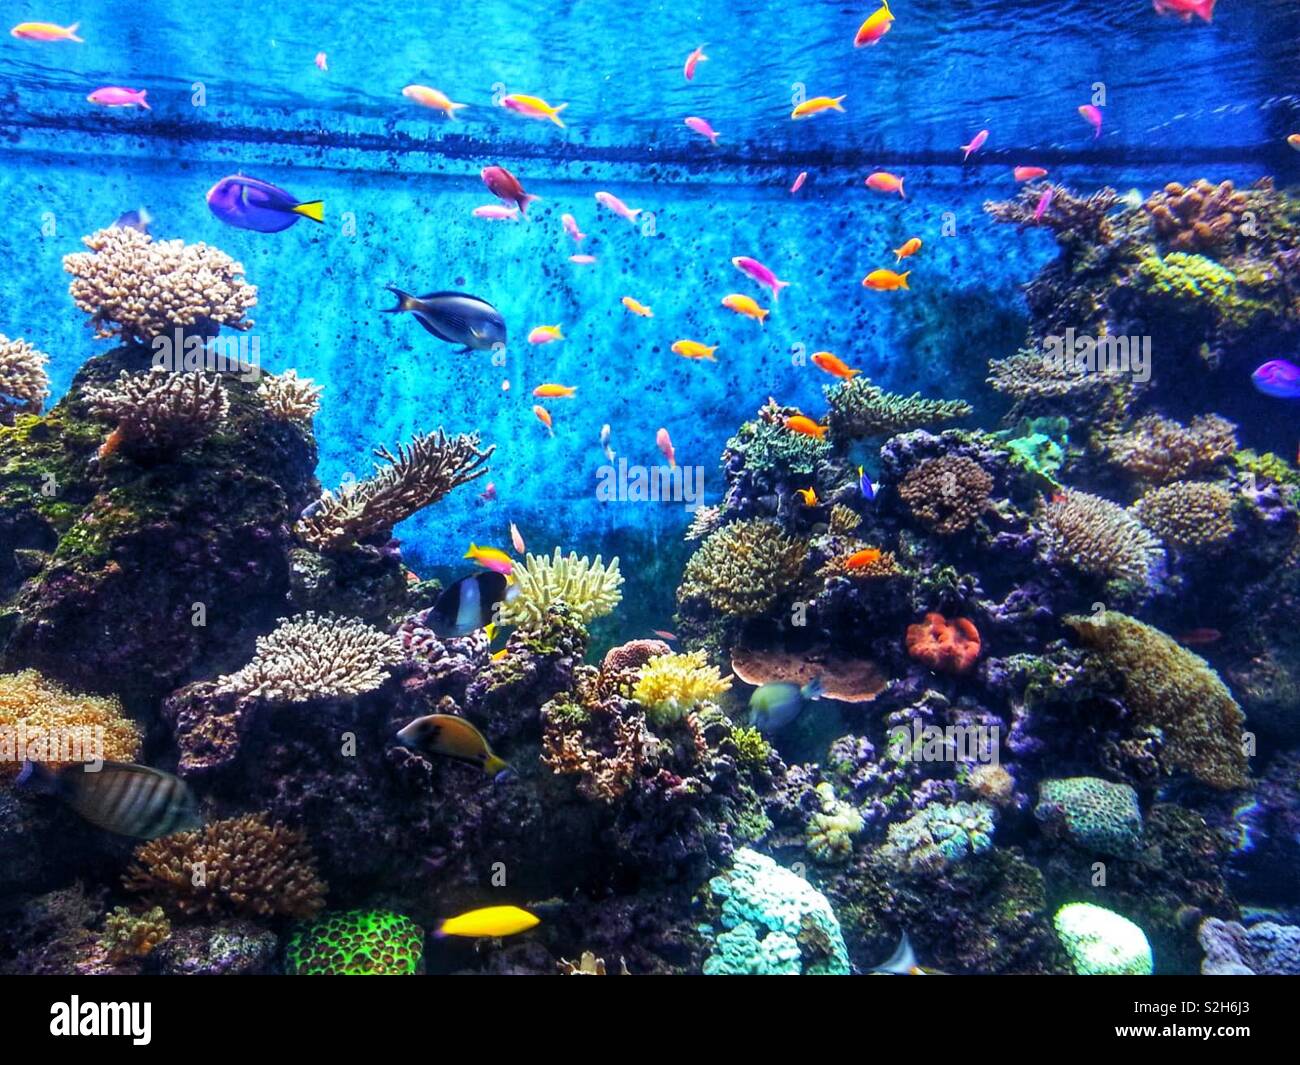 Tropical fish tank Stock Photo - Alamy